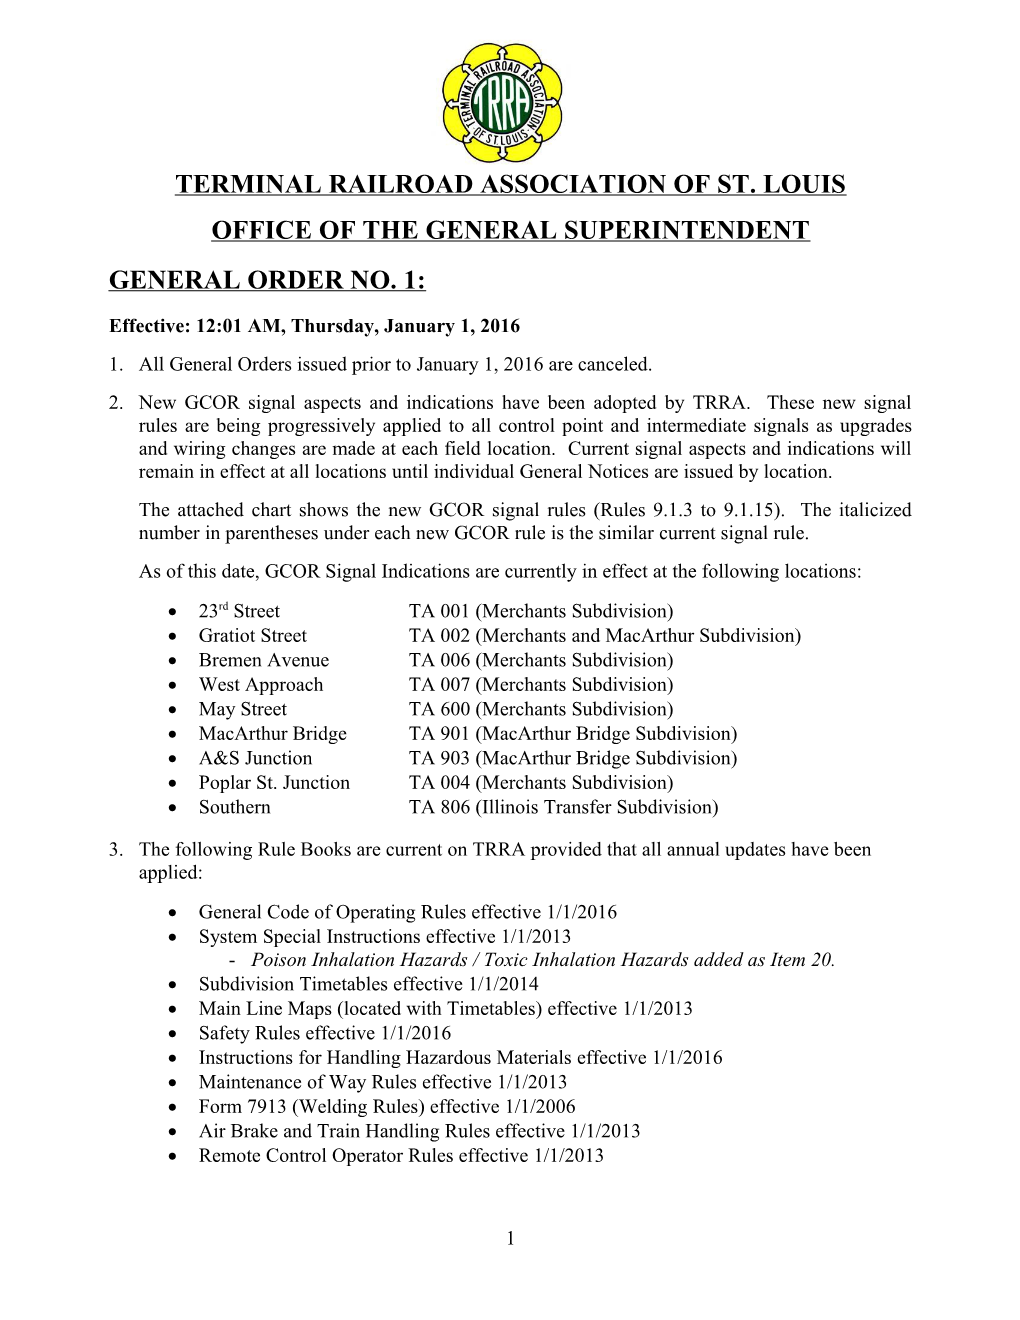 Terminal Railroad Association of St. Louis